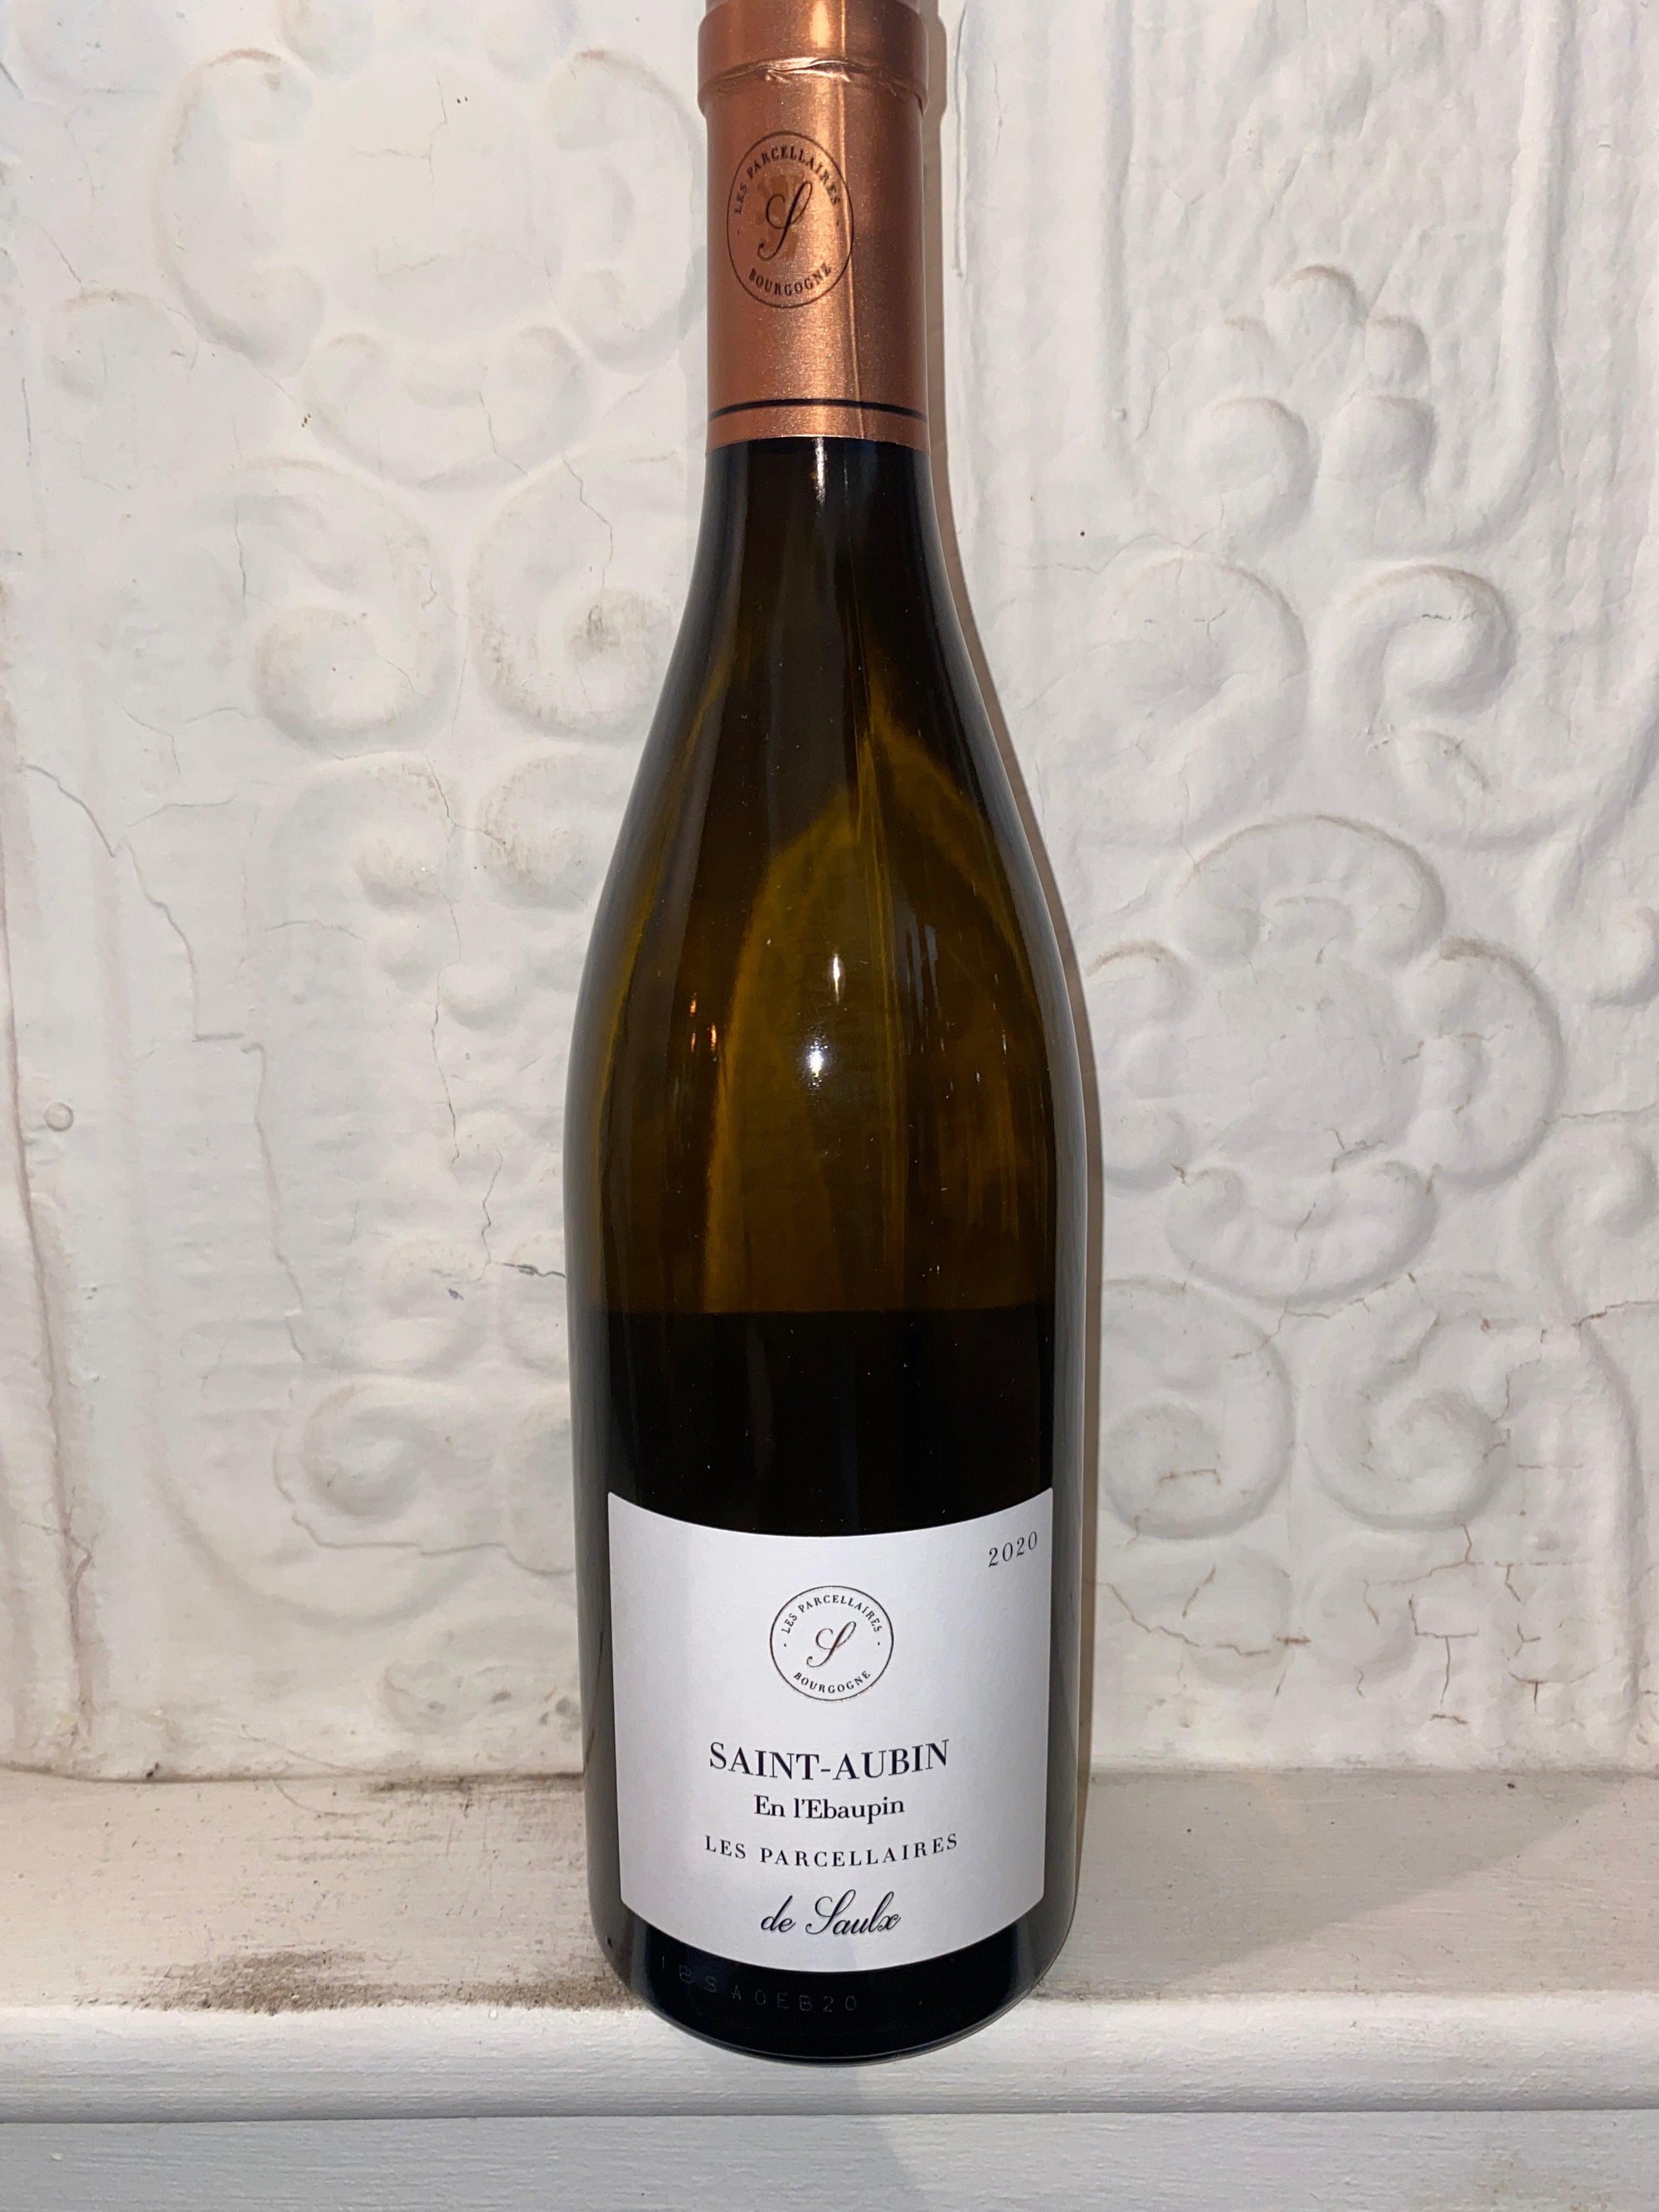 Francois Labet - Bourgogne Blanc VV 2018 - Knightsbridge Wine Shoppe